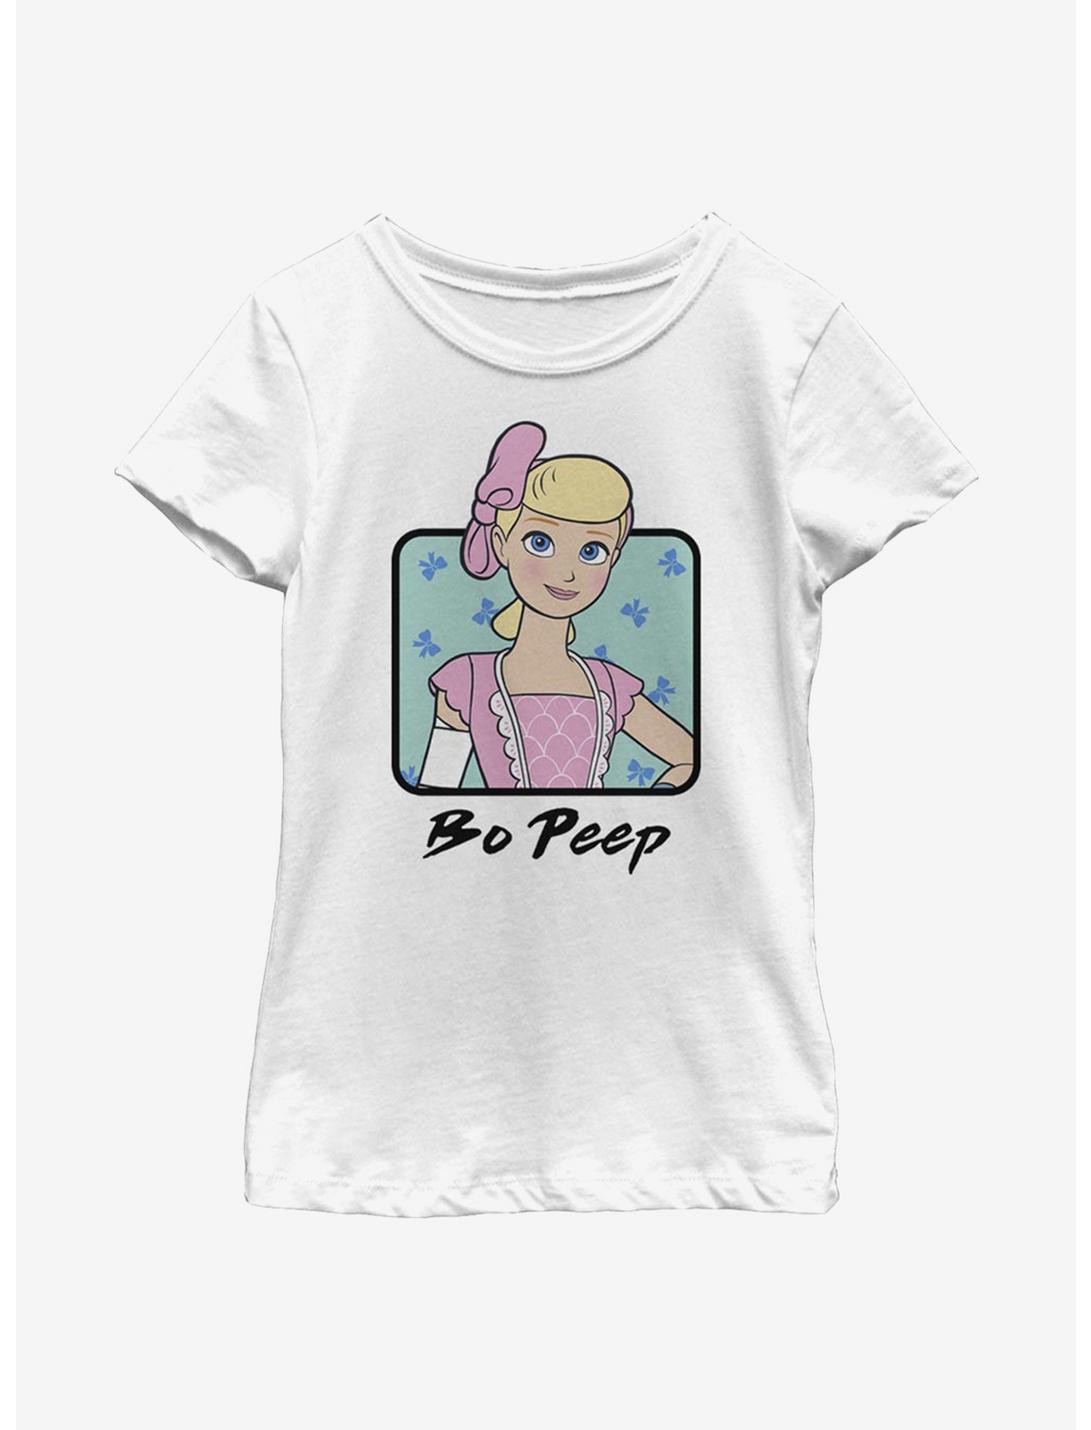 Disney Pixar Toy Story 4 Bo Peep Square Youth Girls T-Shirt, WHITE, hi-res